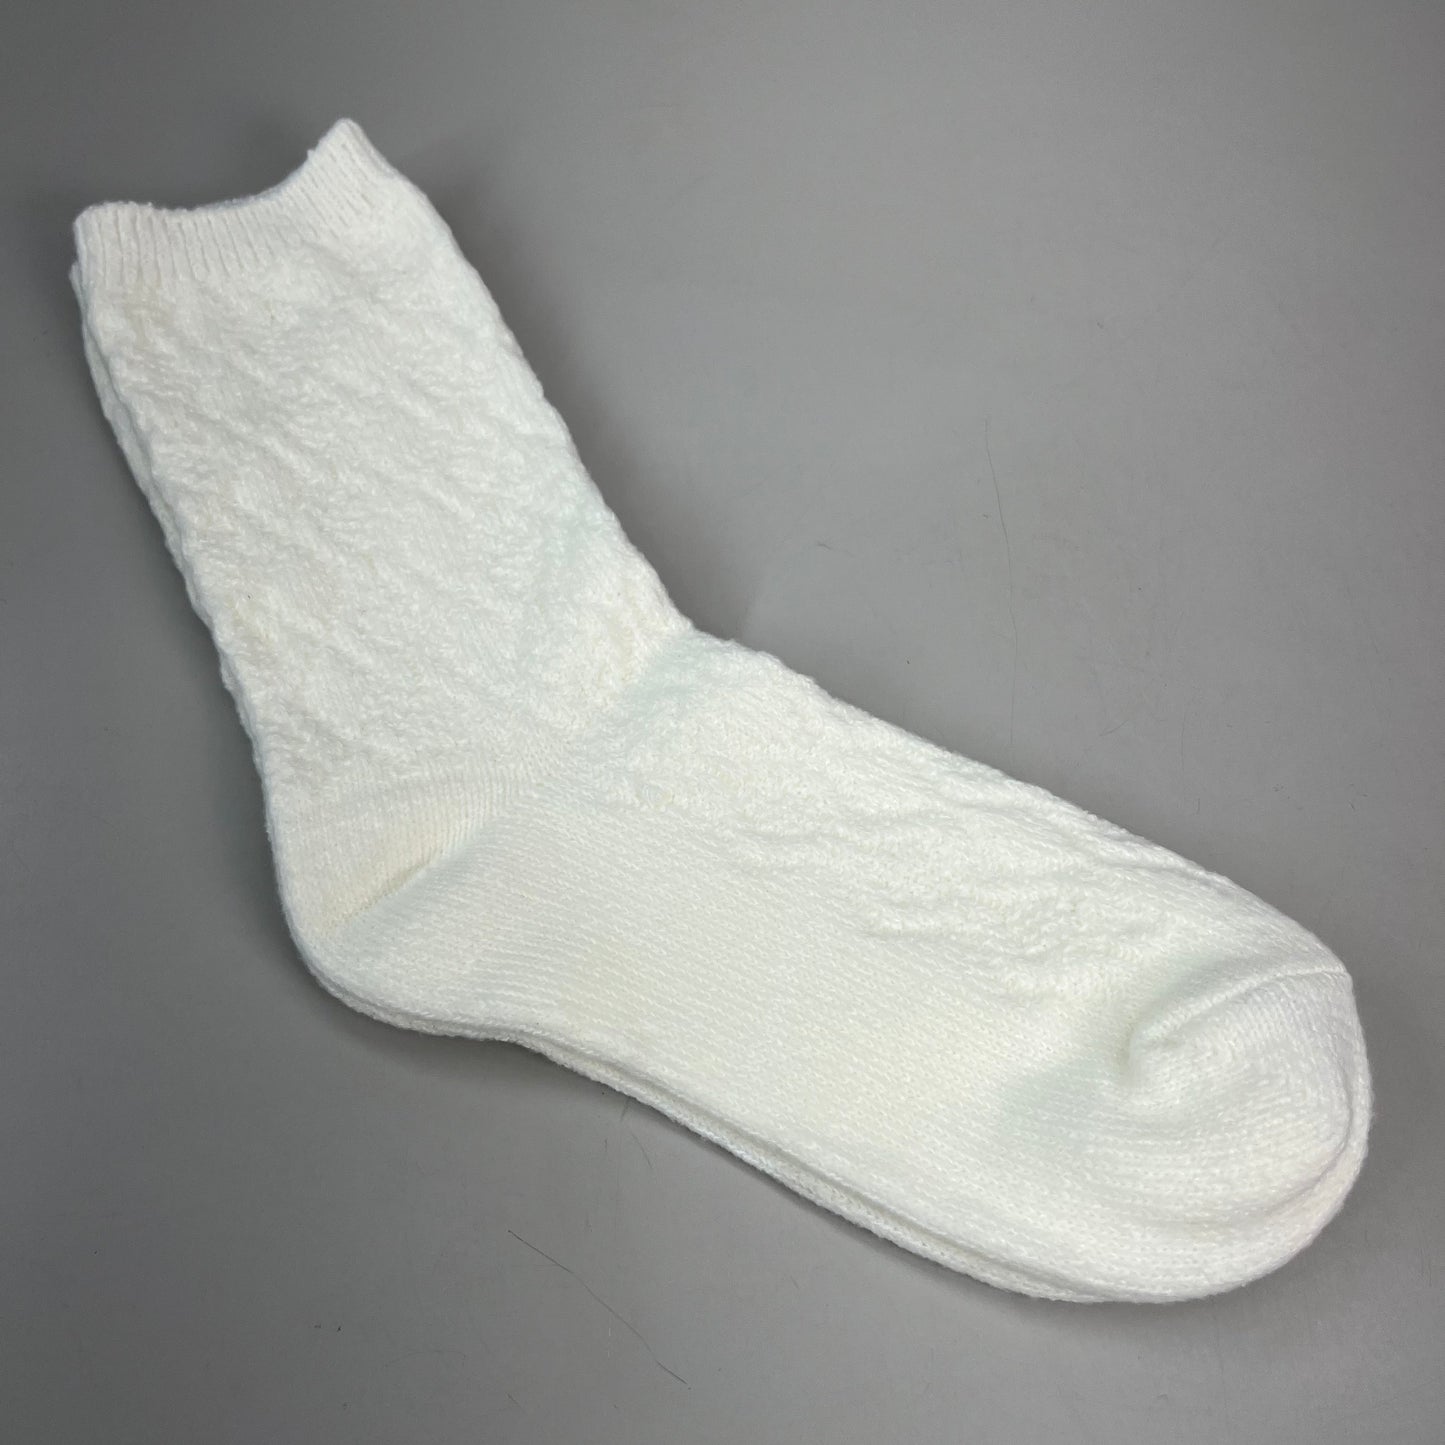 CUDDLE DUDS Soft Boot Crew Socks Plushfill 4 Pair Sz 4-10 Pink Ivory (New)